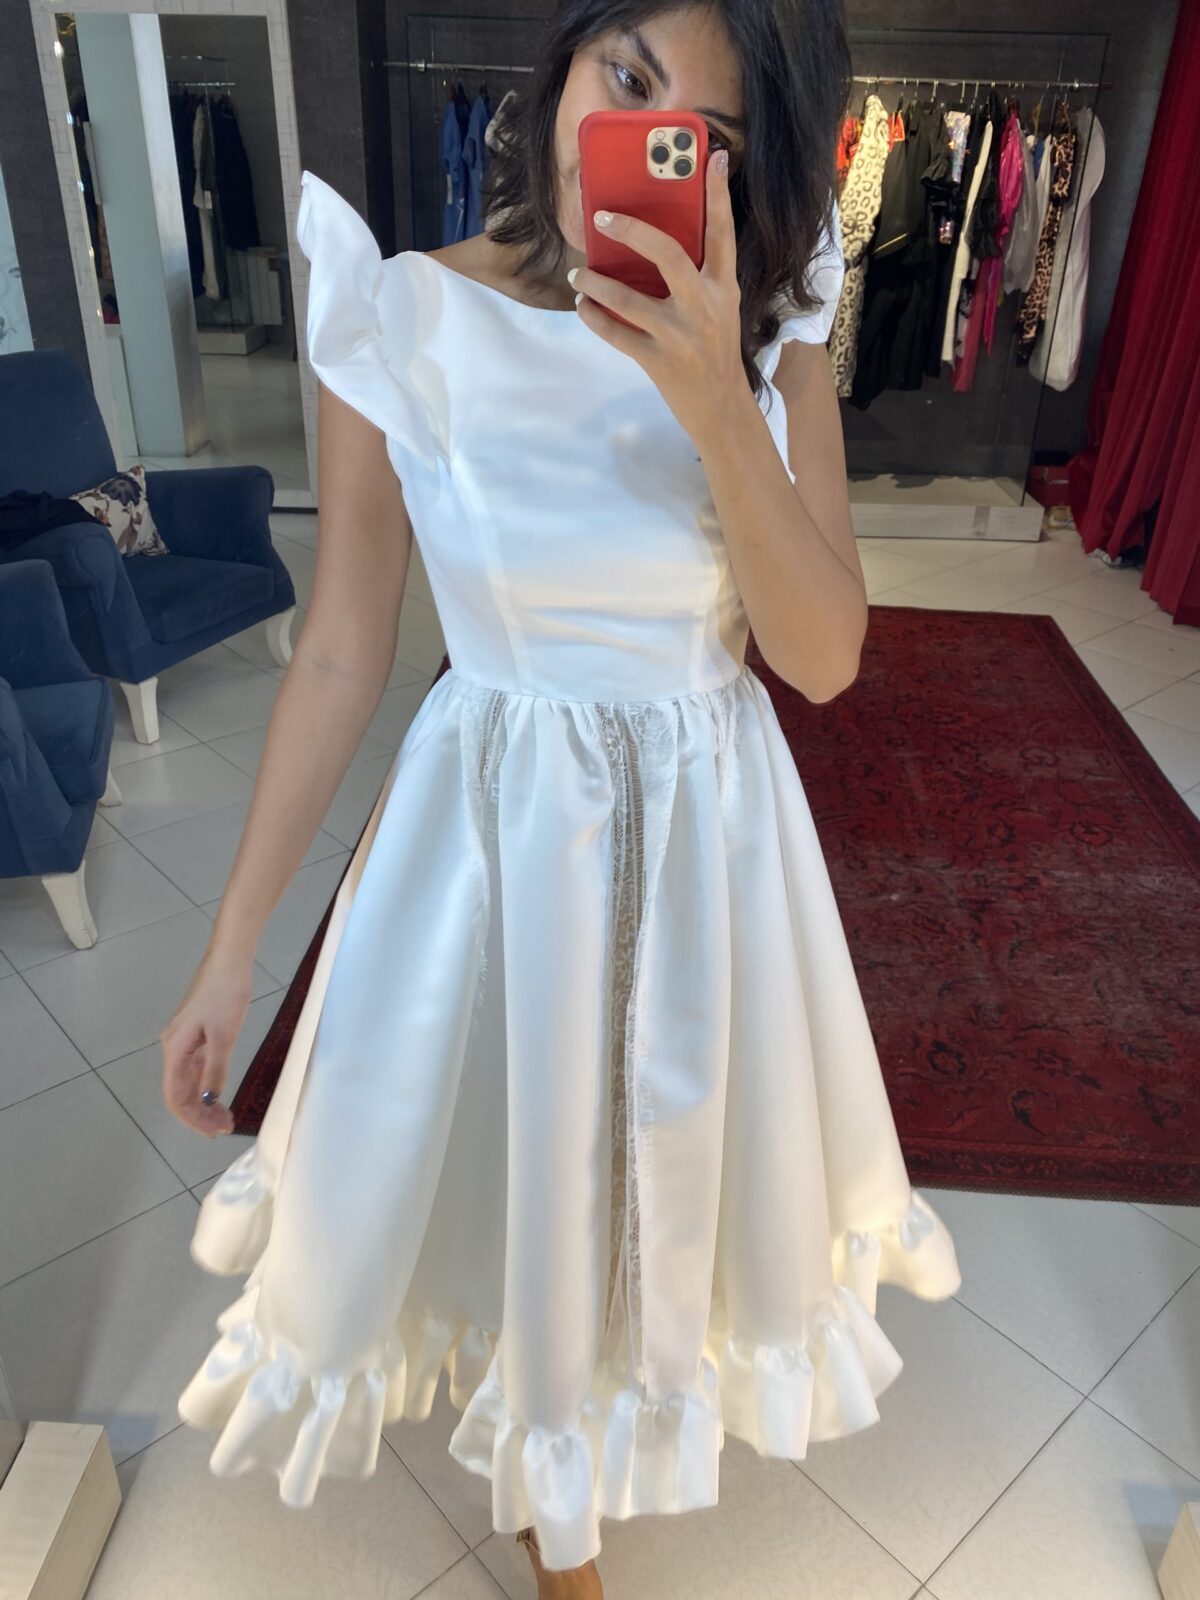 FA201802 966D 44BB 983F 23446A534564 scaled 2 HOBRAT white satin and lace bridal dress